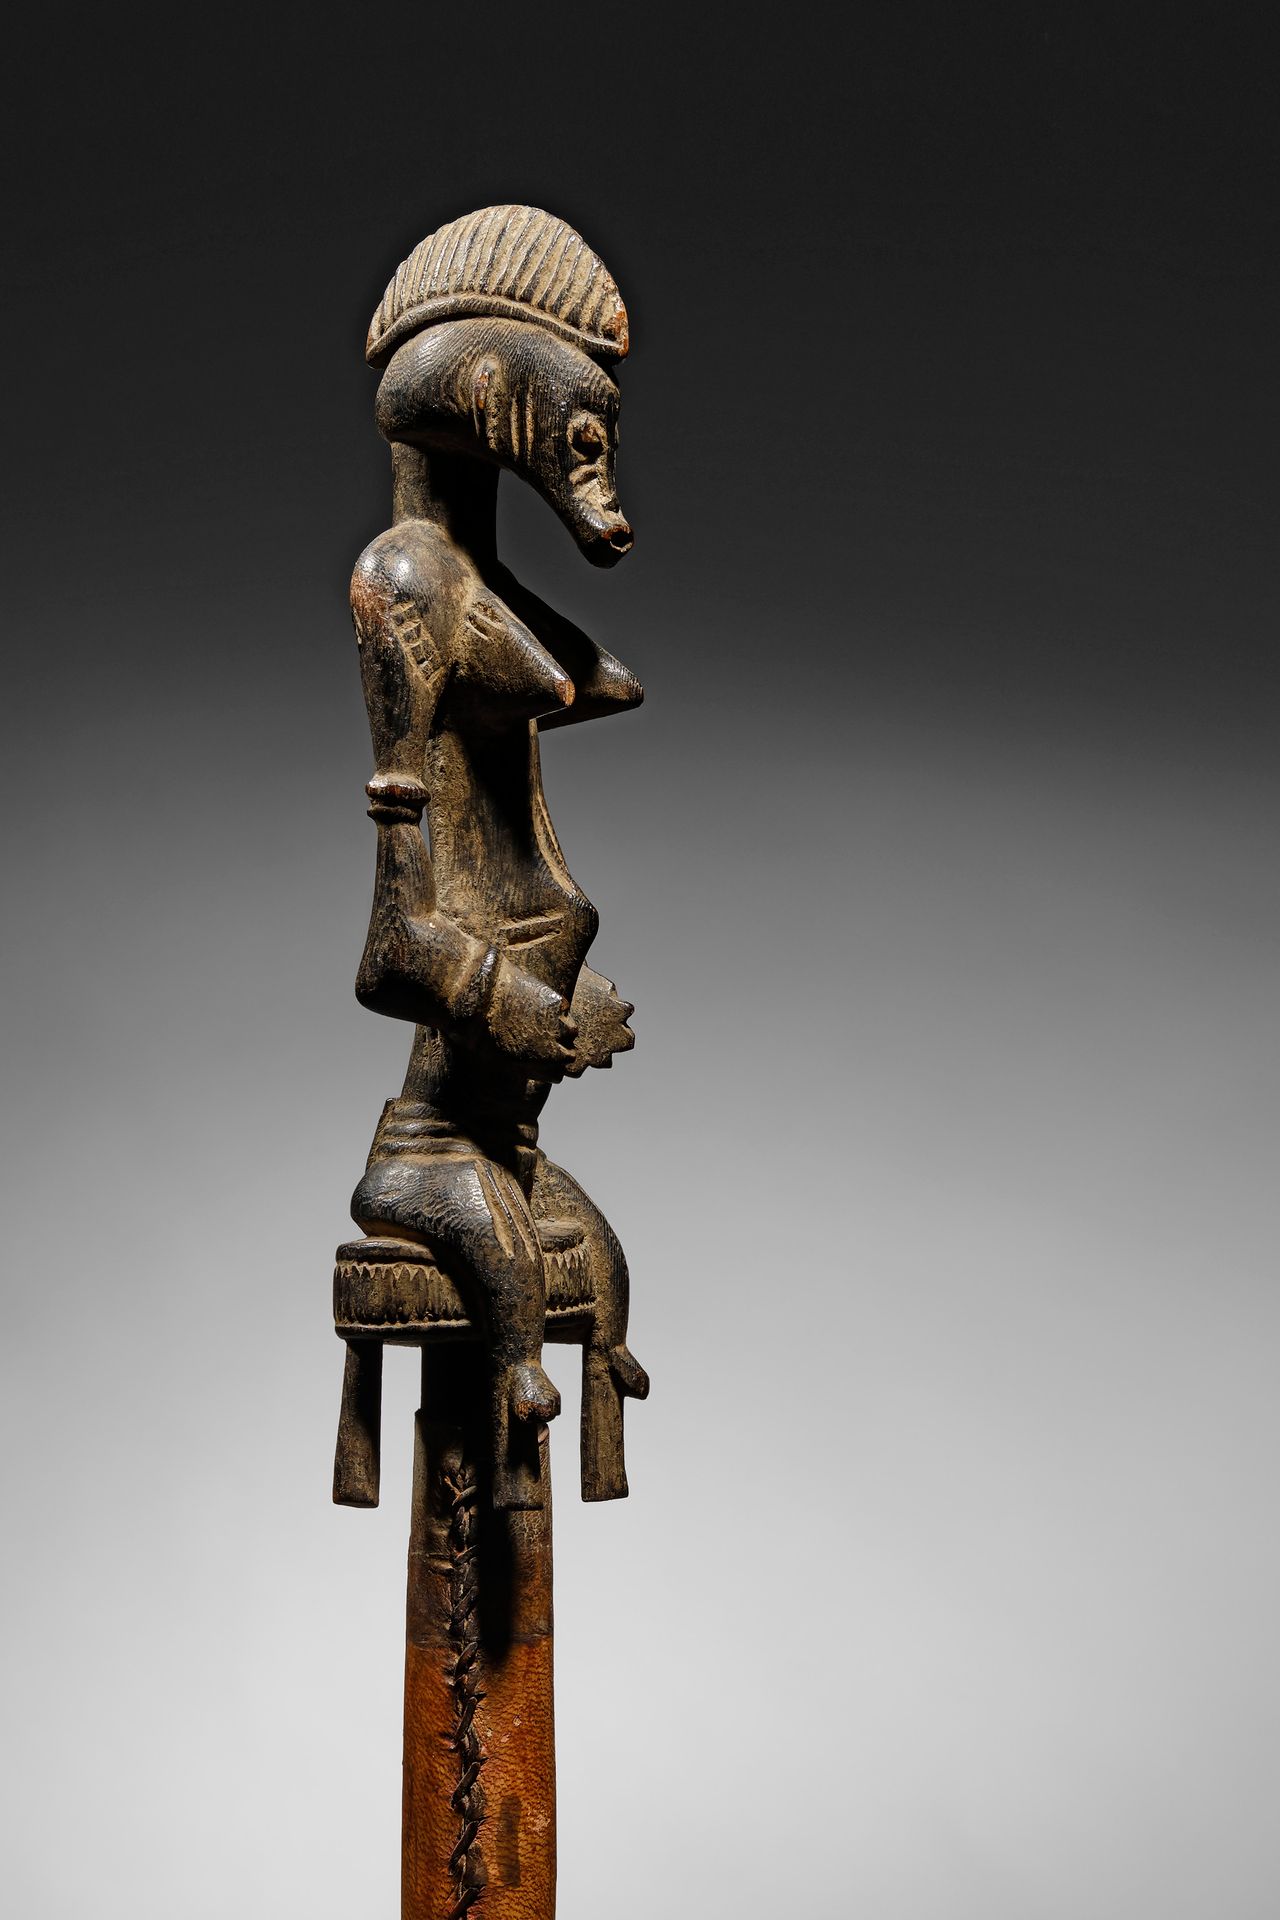 Senufo Staff Costa de Marfil

Madera y cuero - 143 cm; figura: 22,5 cm

Proceden&hellip;